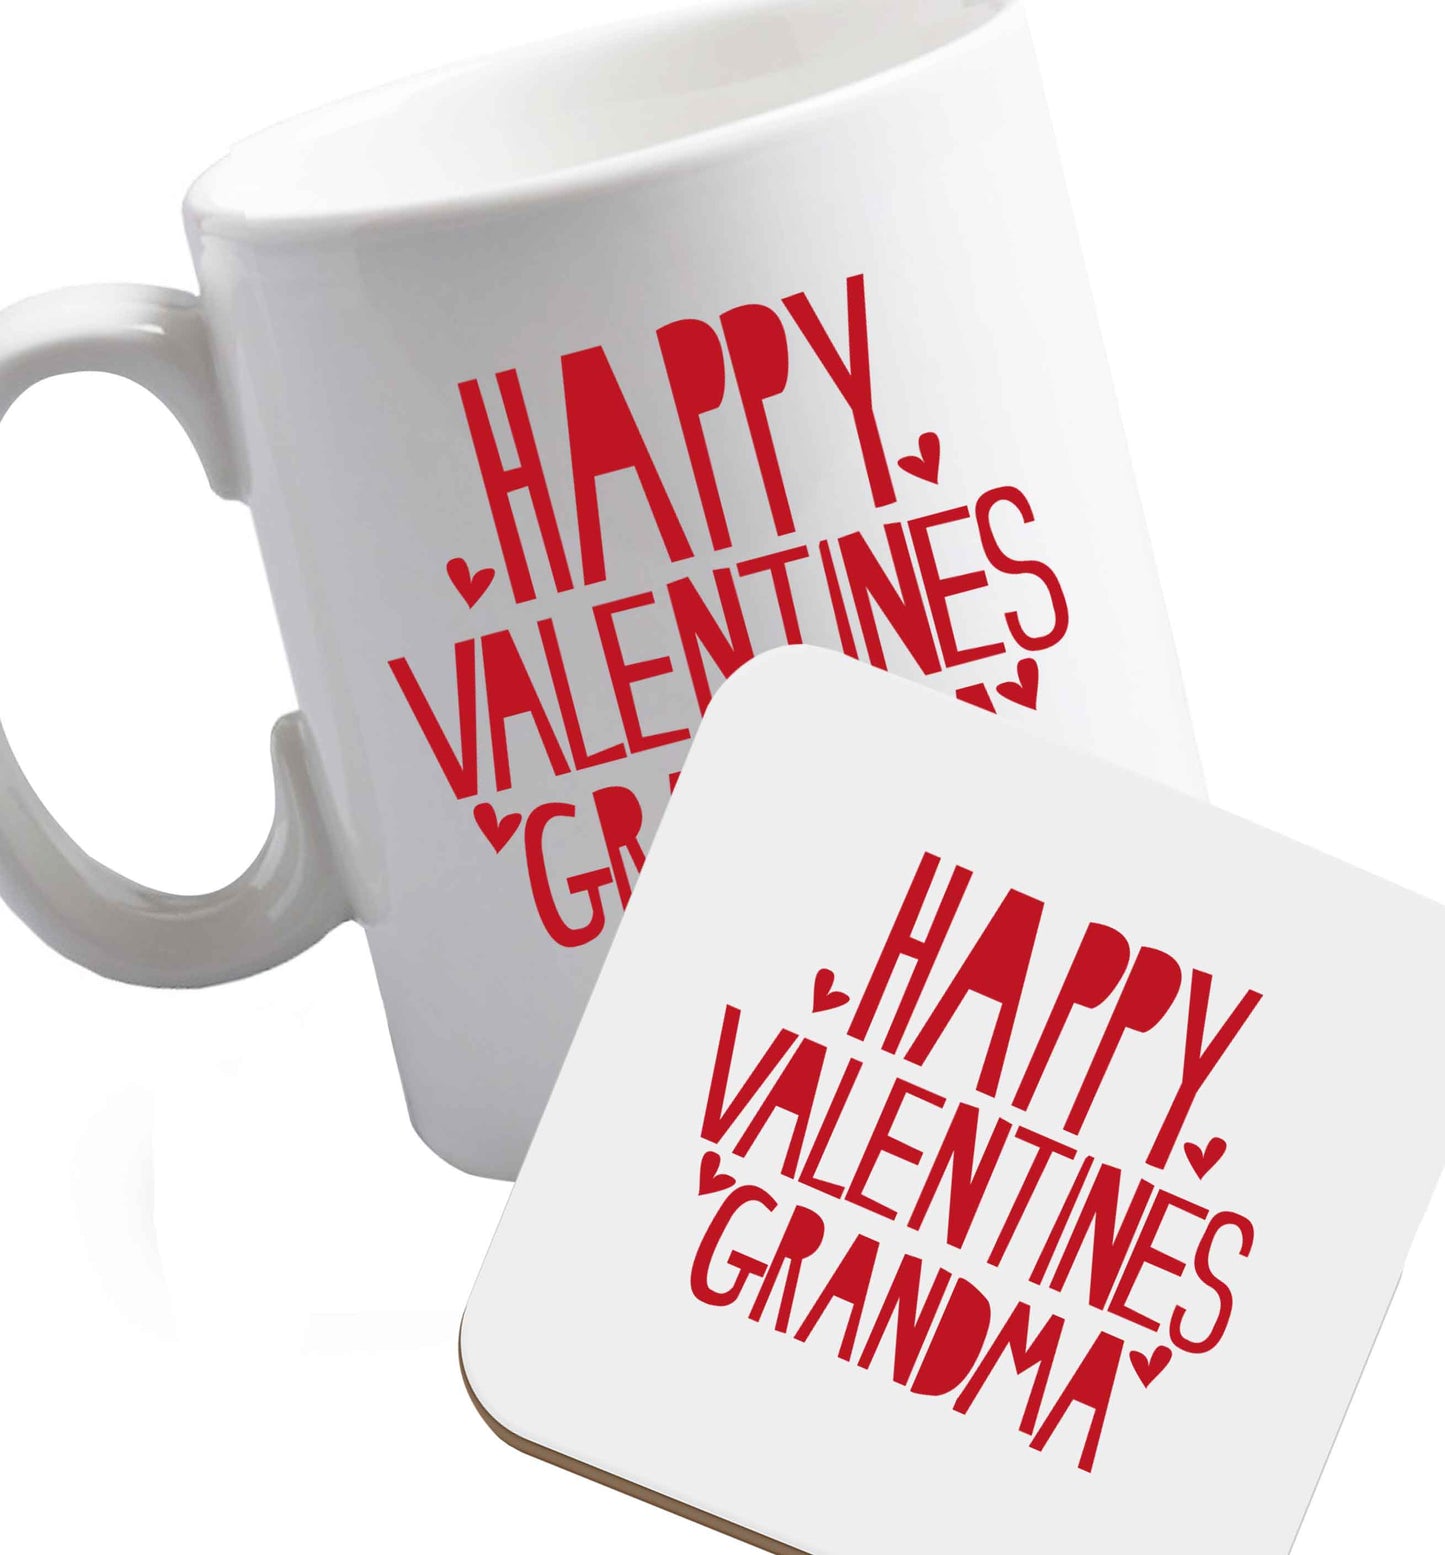 10 oz Happy valentines grandma ceramic mug and coaster set right handed